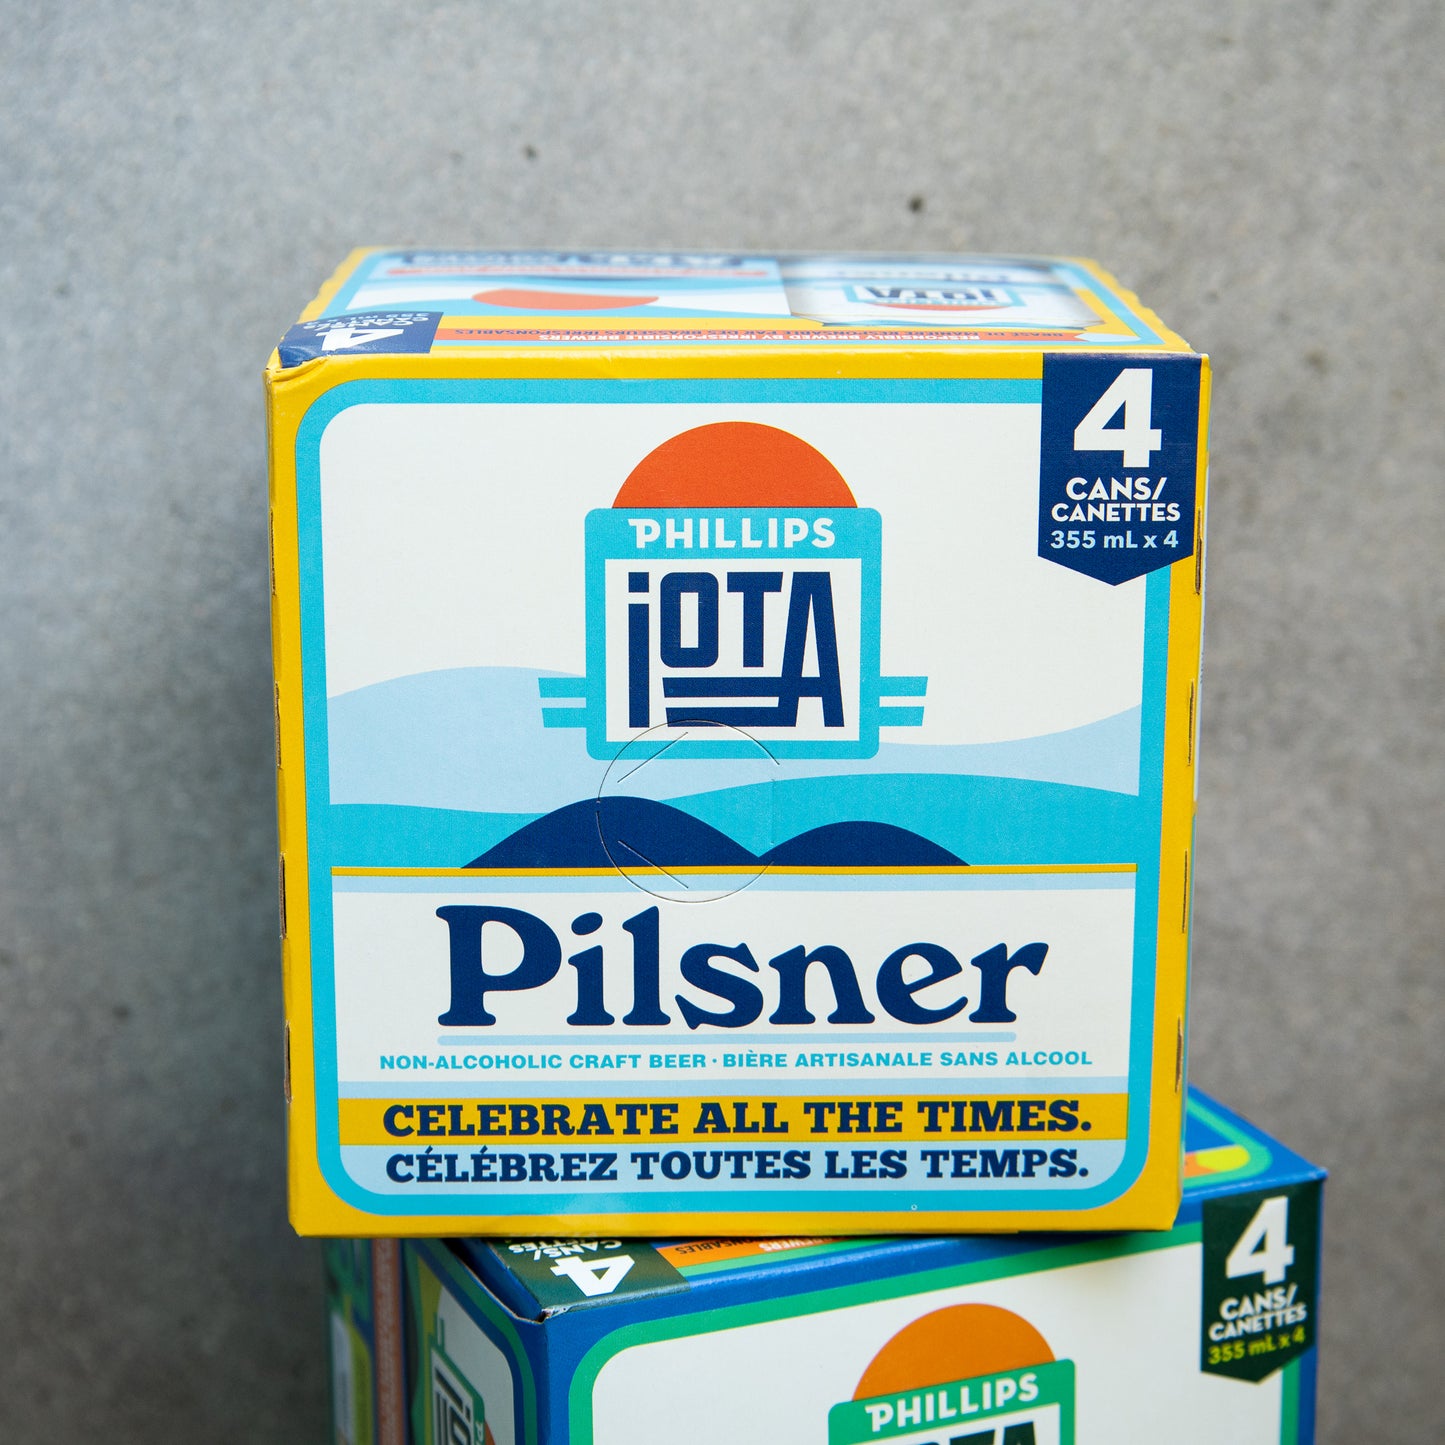 Phillips Brewing 'iota' Non-alcoholic Pilsner